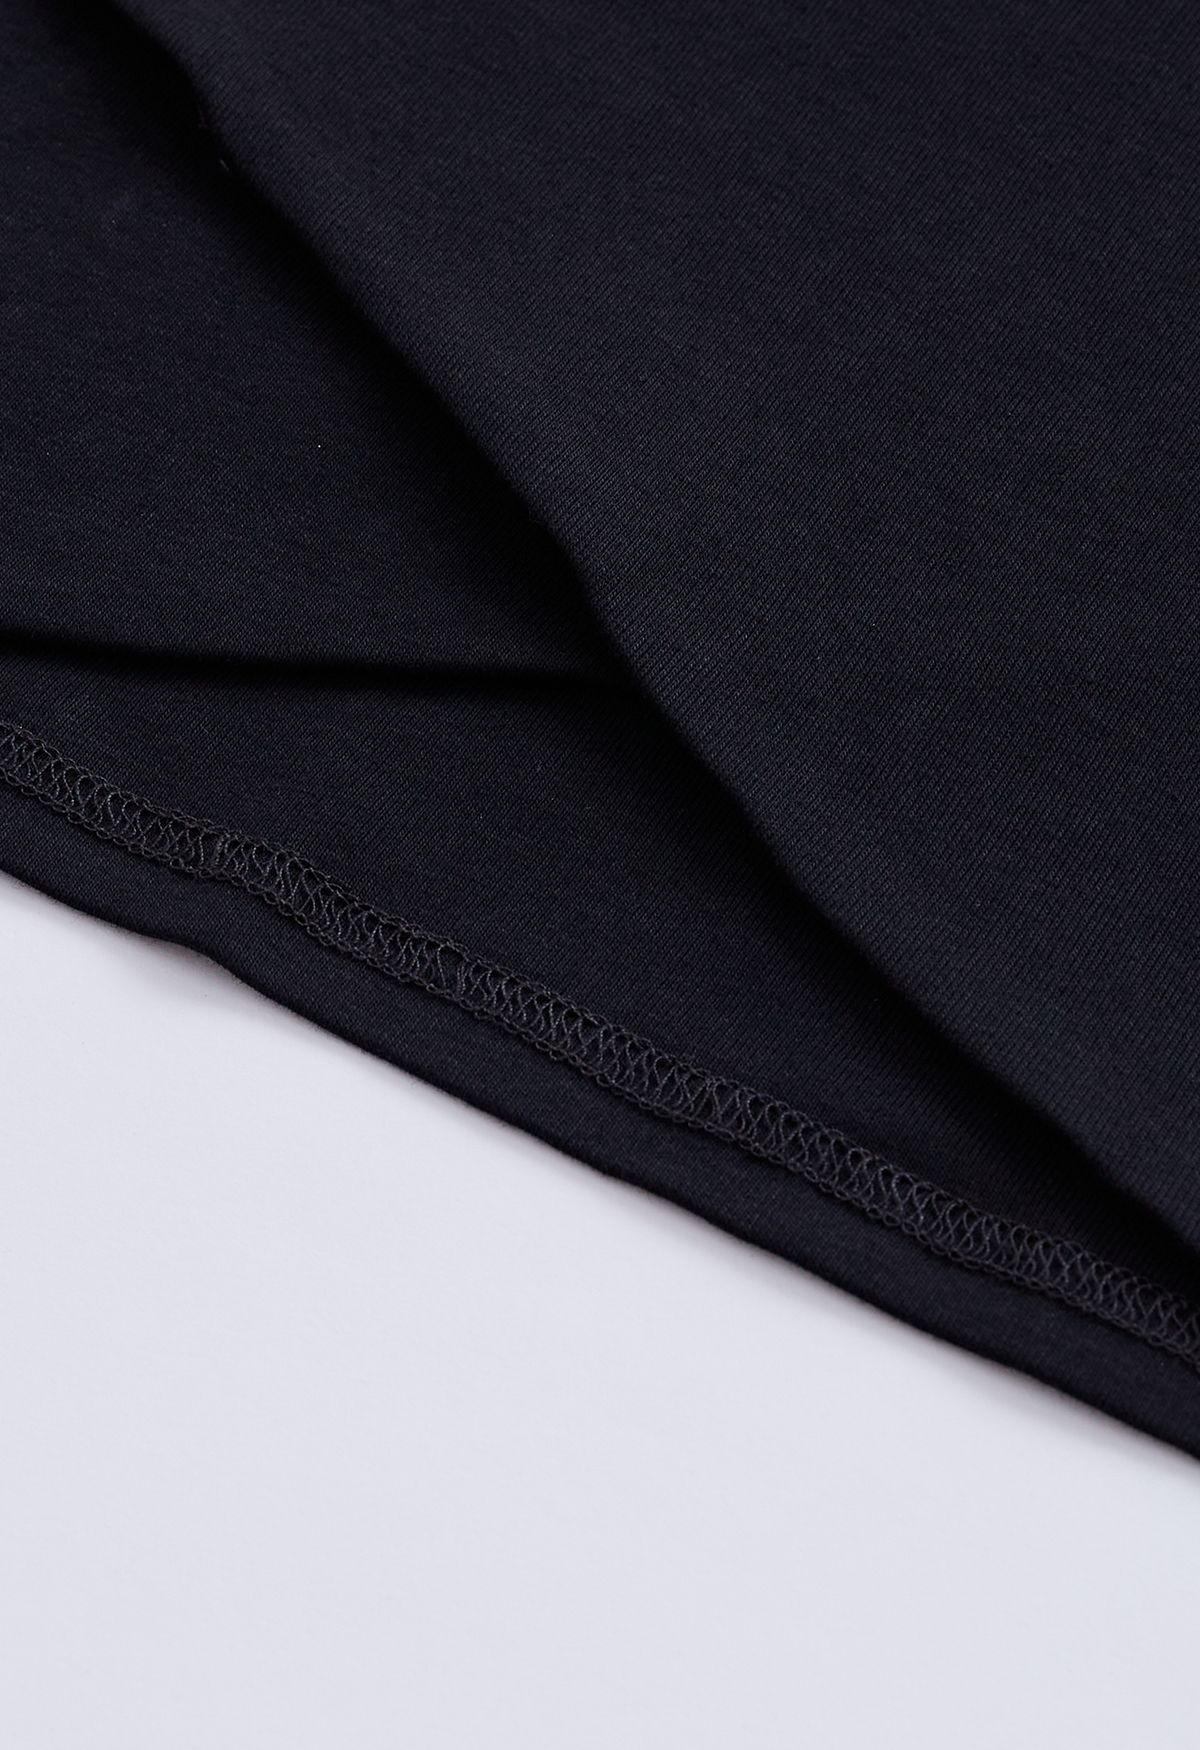 Crisscross Faux-Wrap Soft Cotton Top in Black